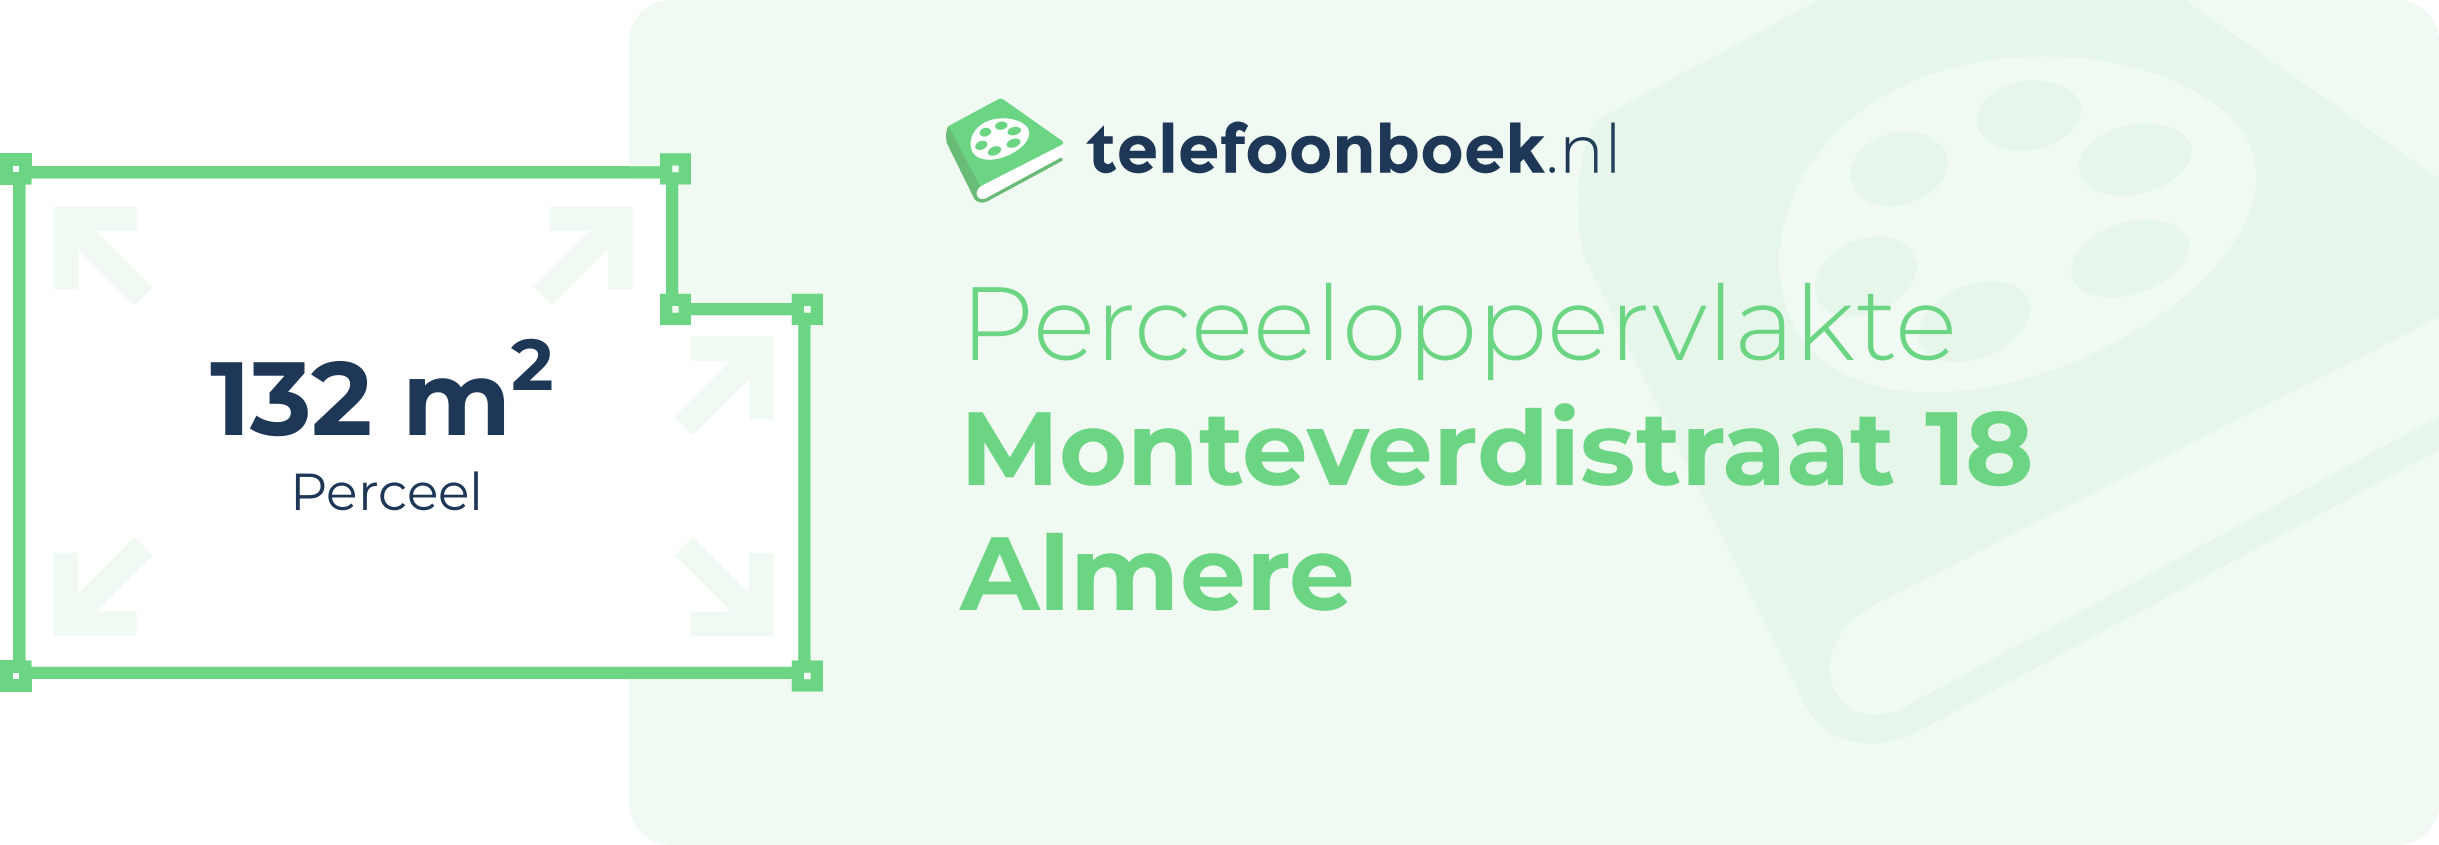 Perceeloppervlakte Monteverdistraat 18 Almere